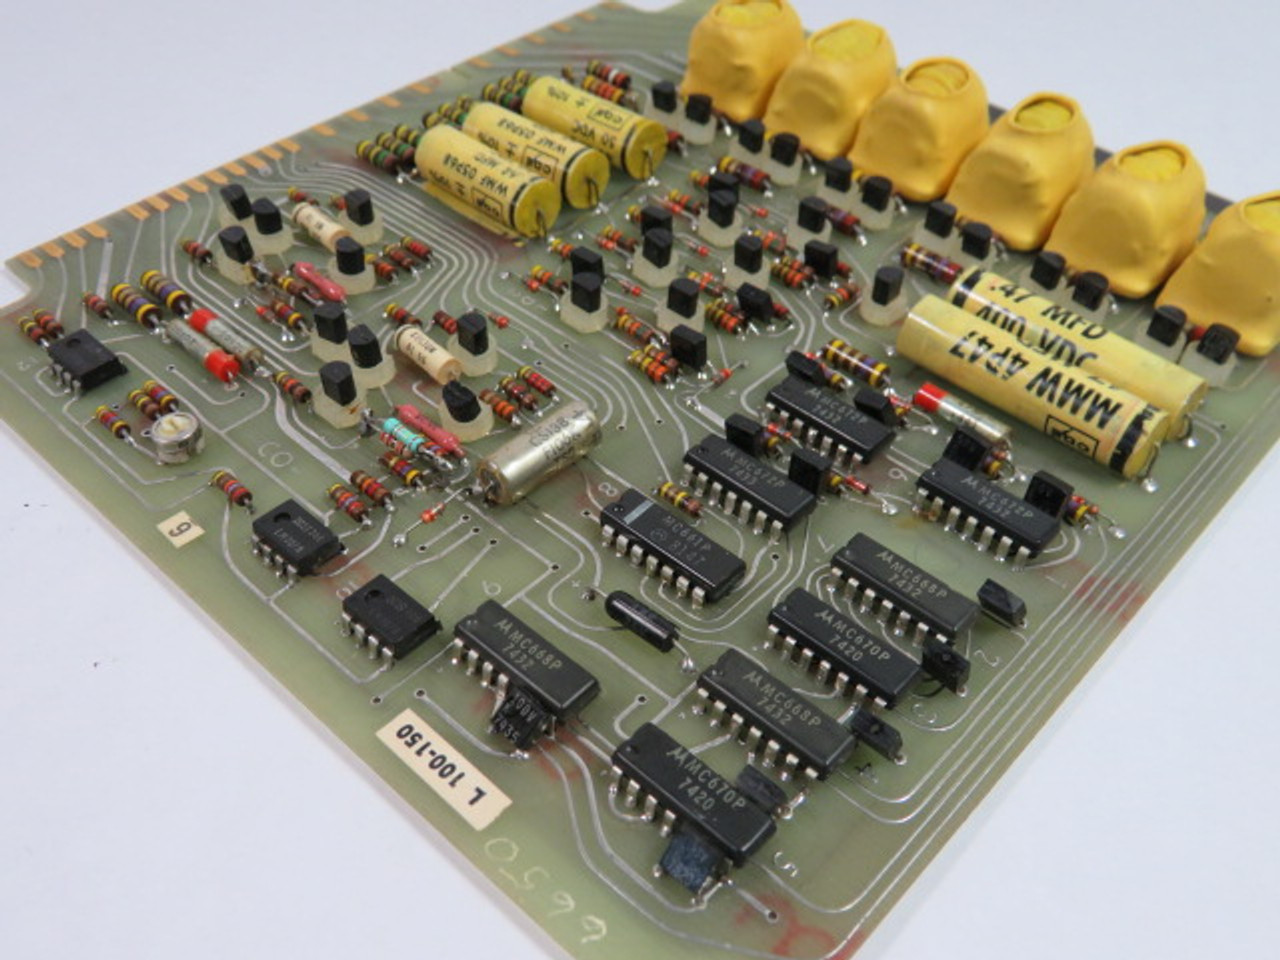 Unico 500-001-H Circuit Board USED